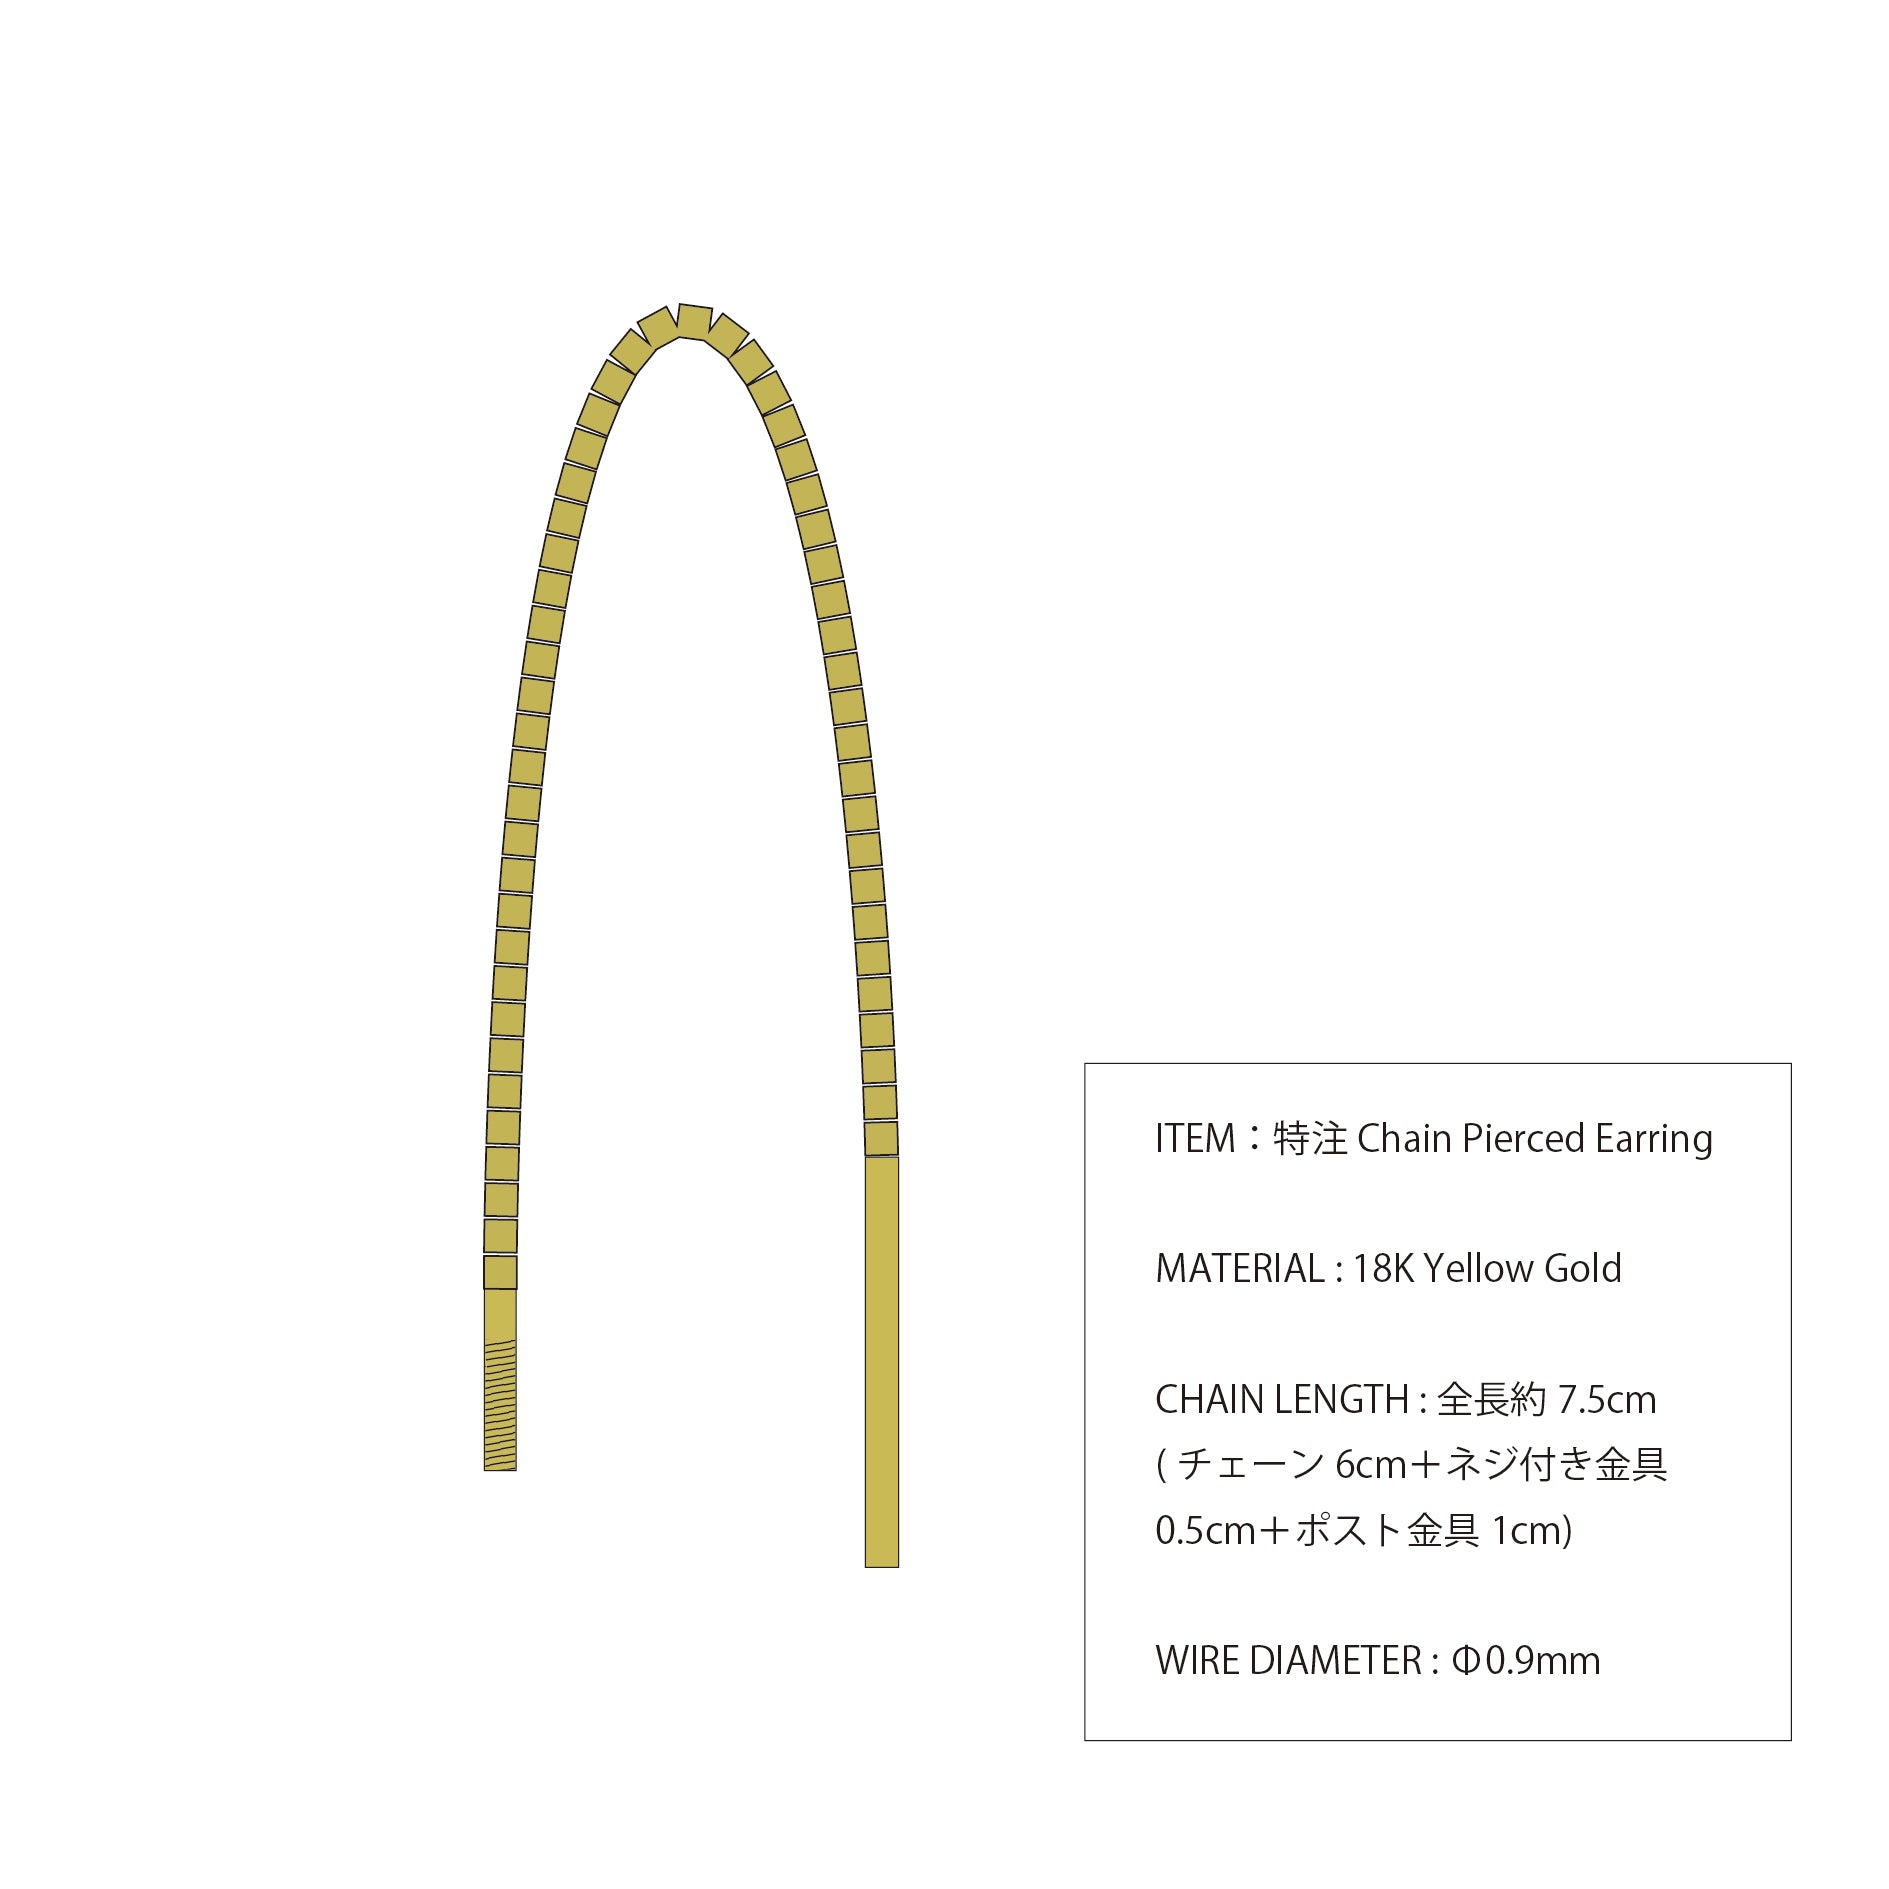 【龍様】BASE PARTS - K18YG Chain Pierced Earring